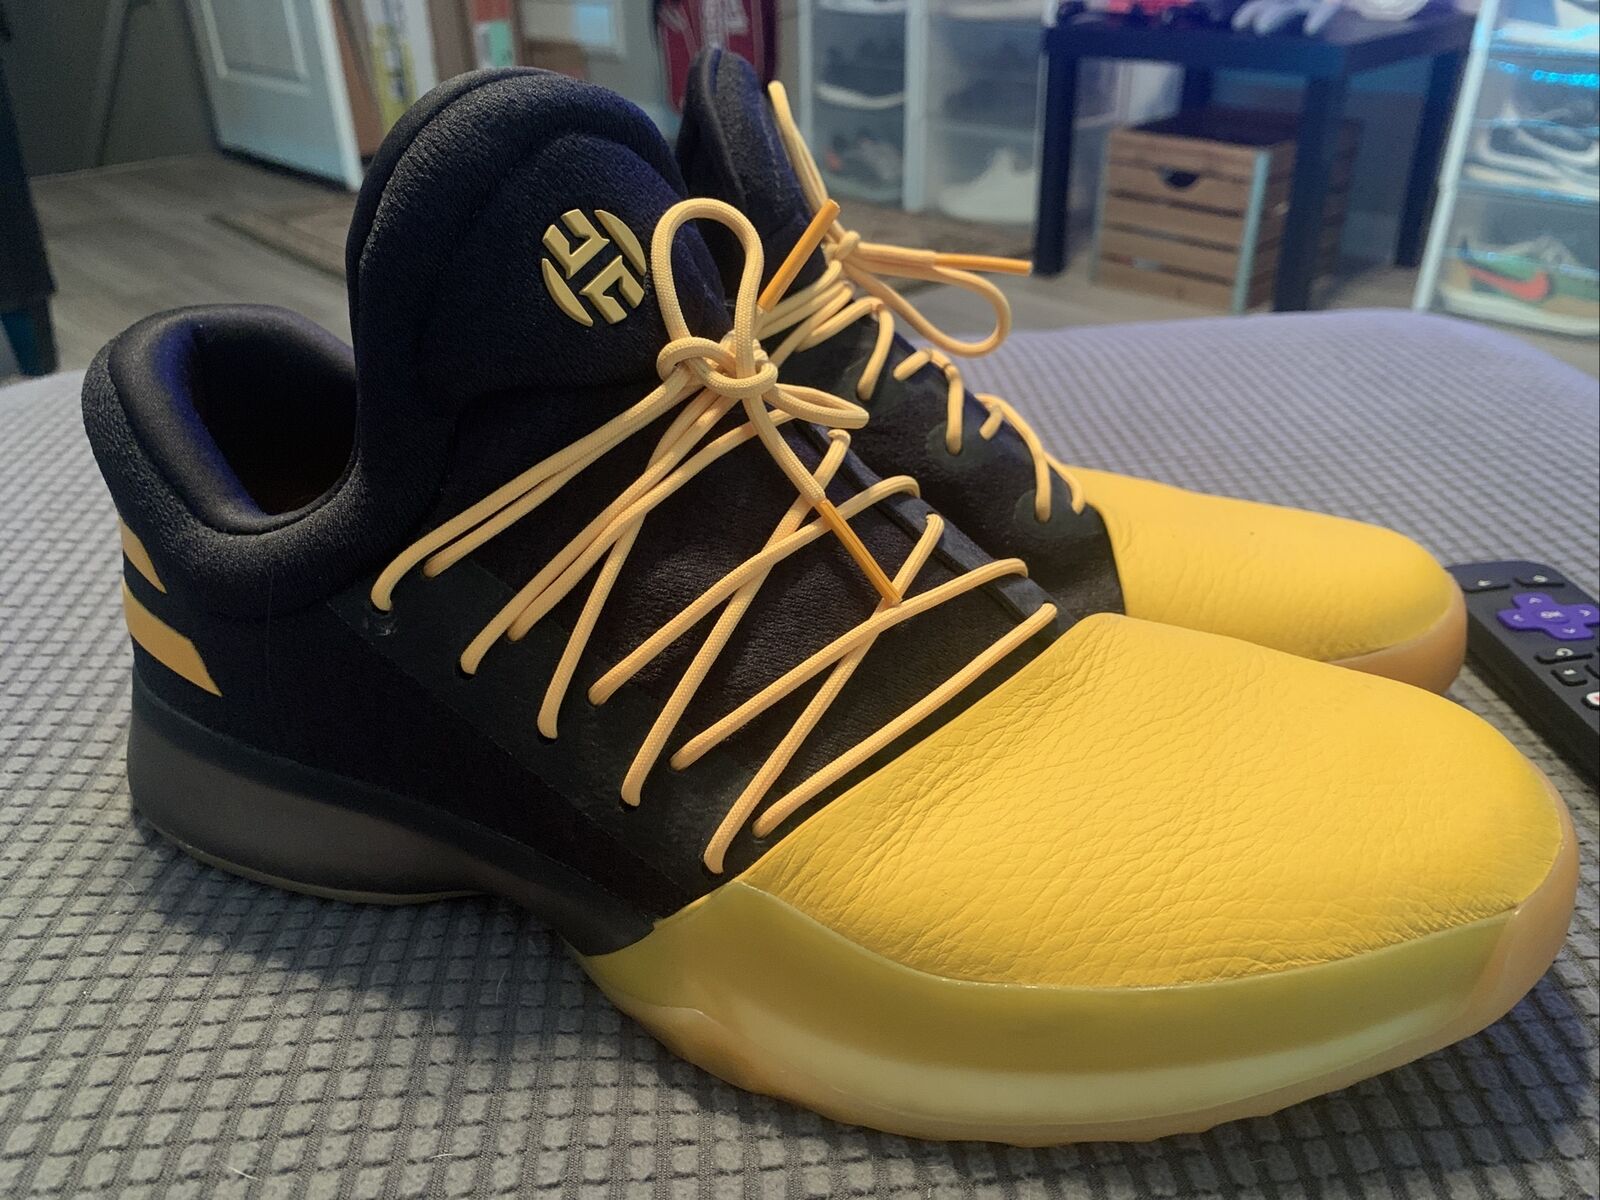 Adidas Harden Vol 1 Yellow Black Basketball Shoes Size 14